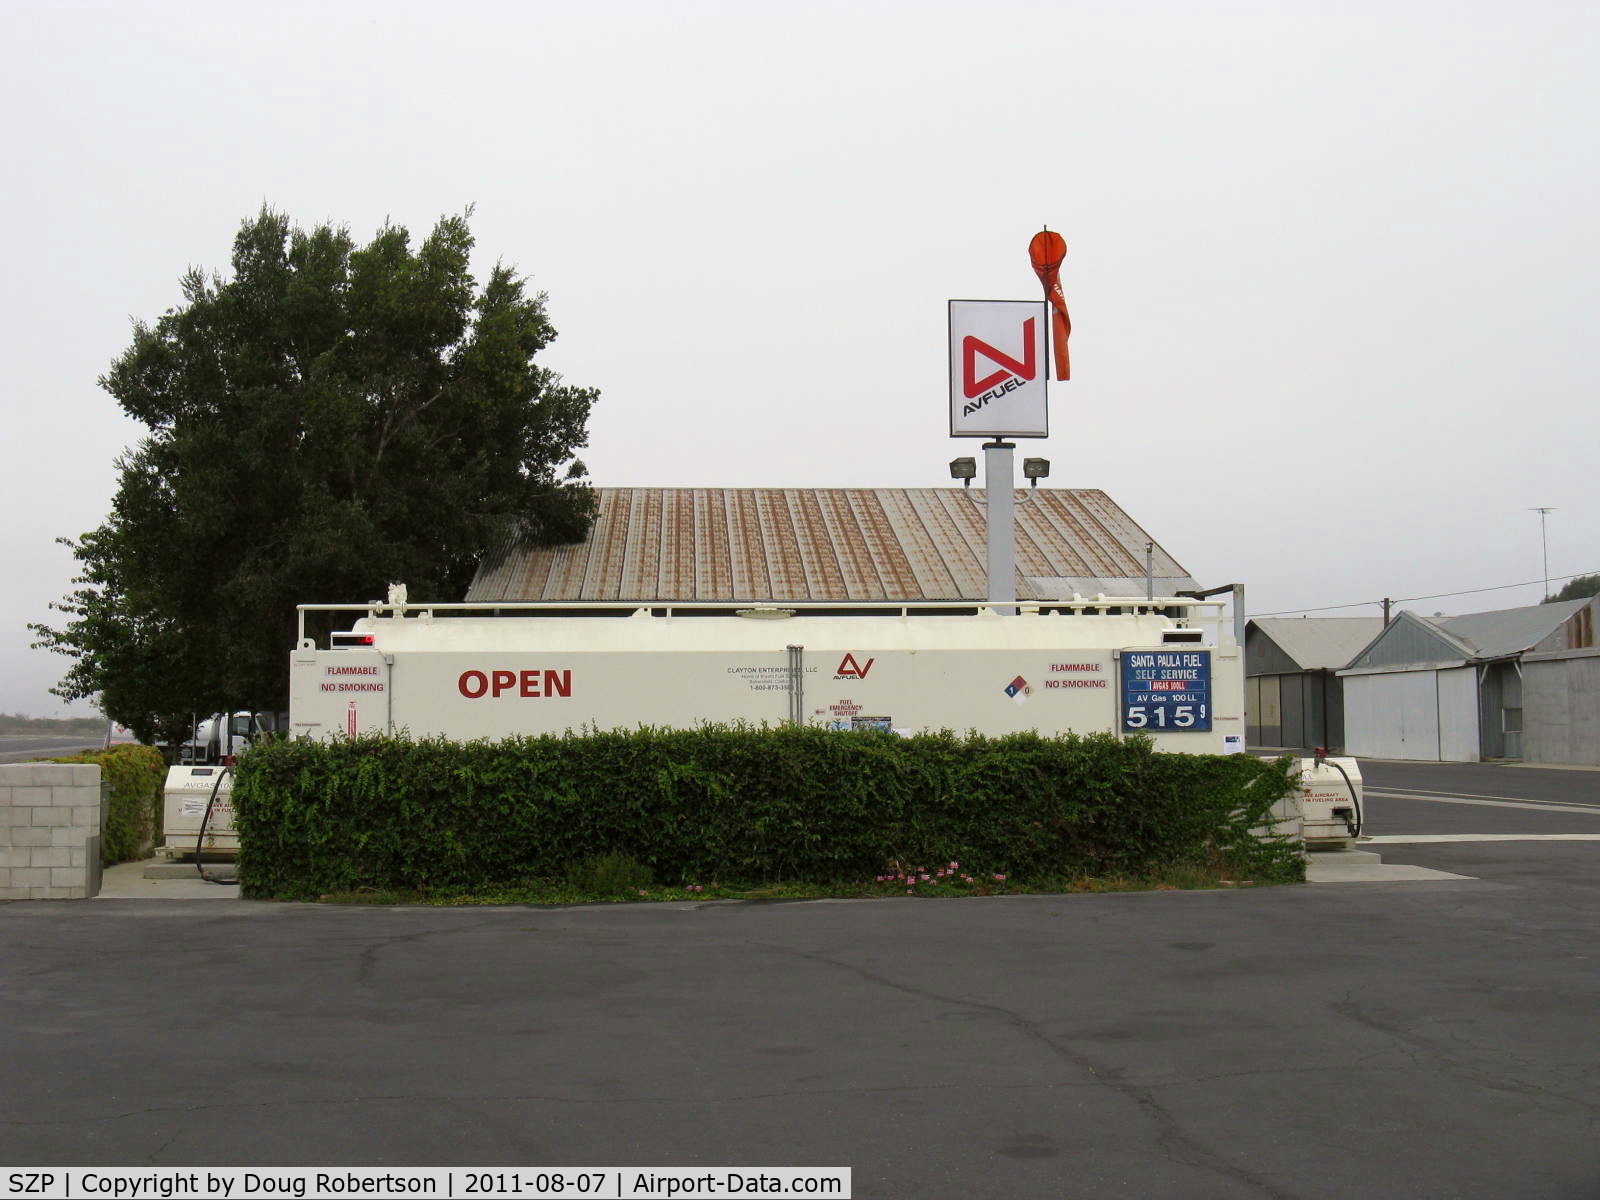 Santa Paula Airport (SZP) - Self-Serve 100LL Fuel Dock. Still lowest price in Ventura County